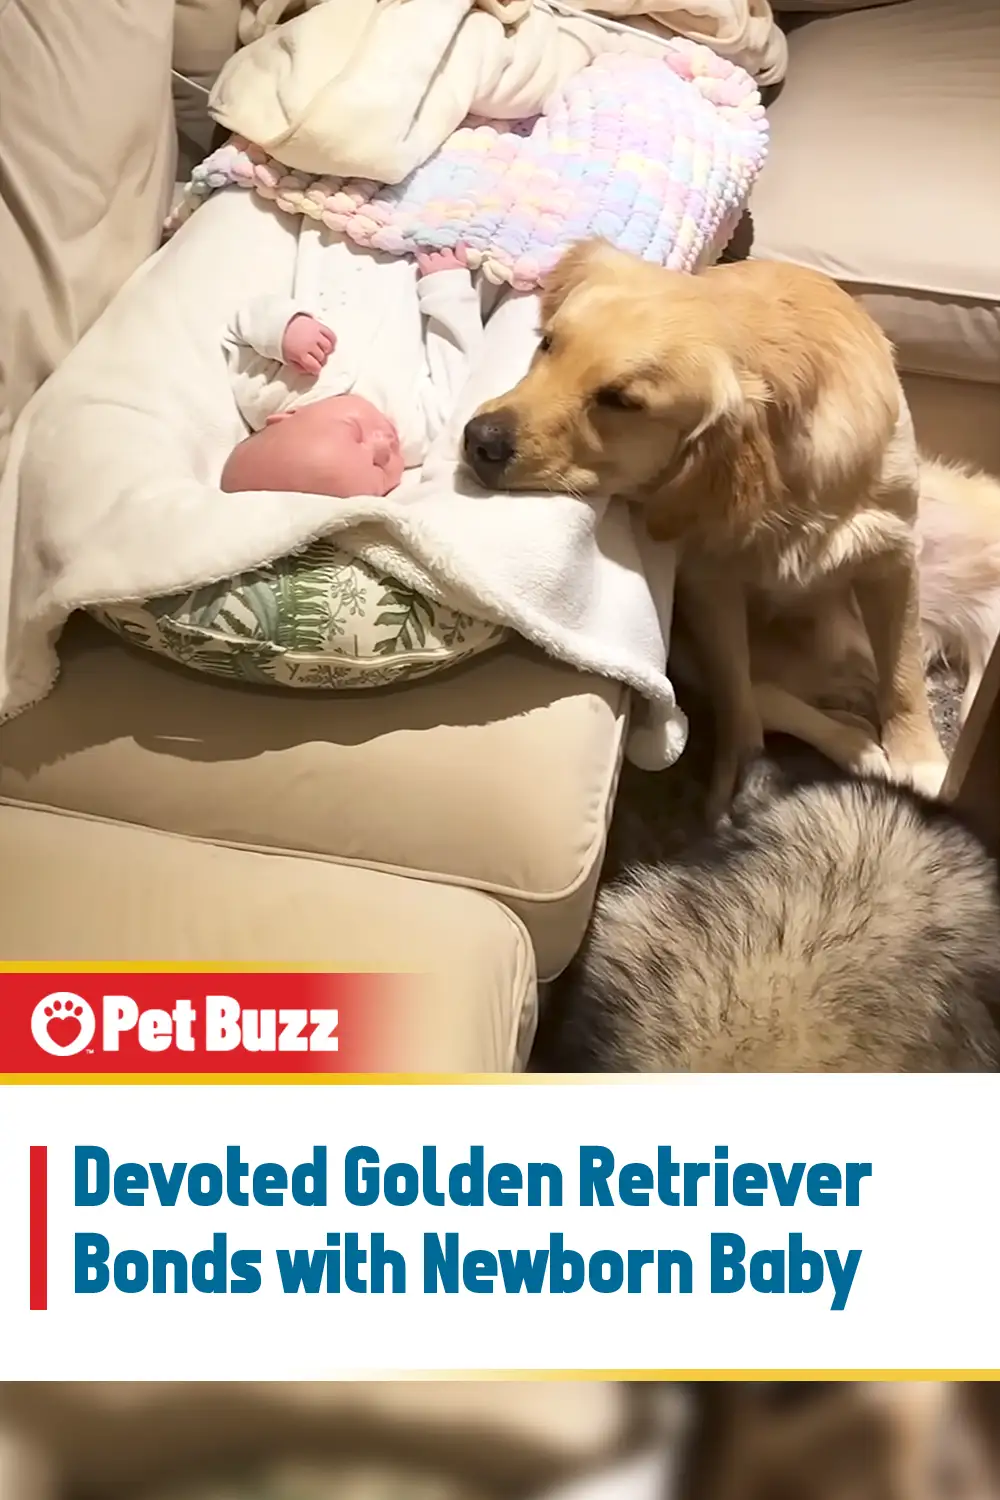 Devoted Golden Retriever Bonds with Newborn Baby